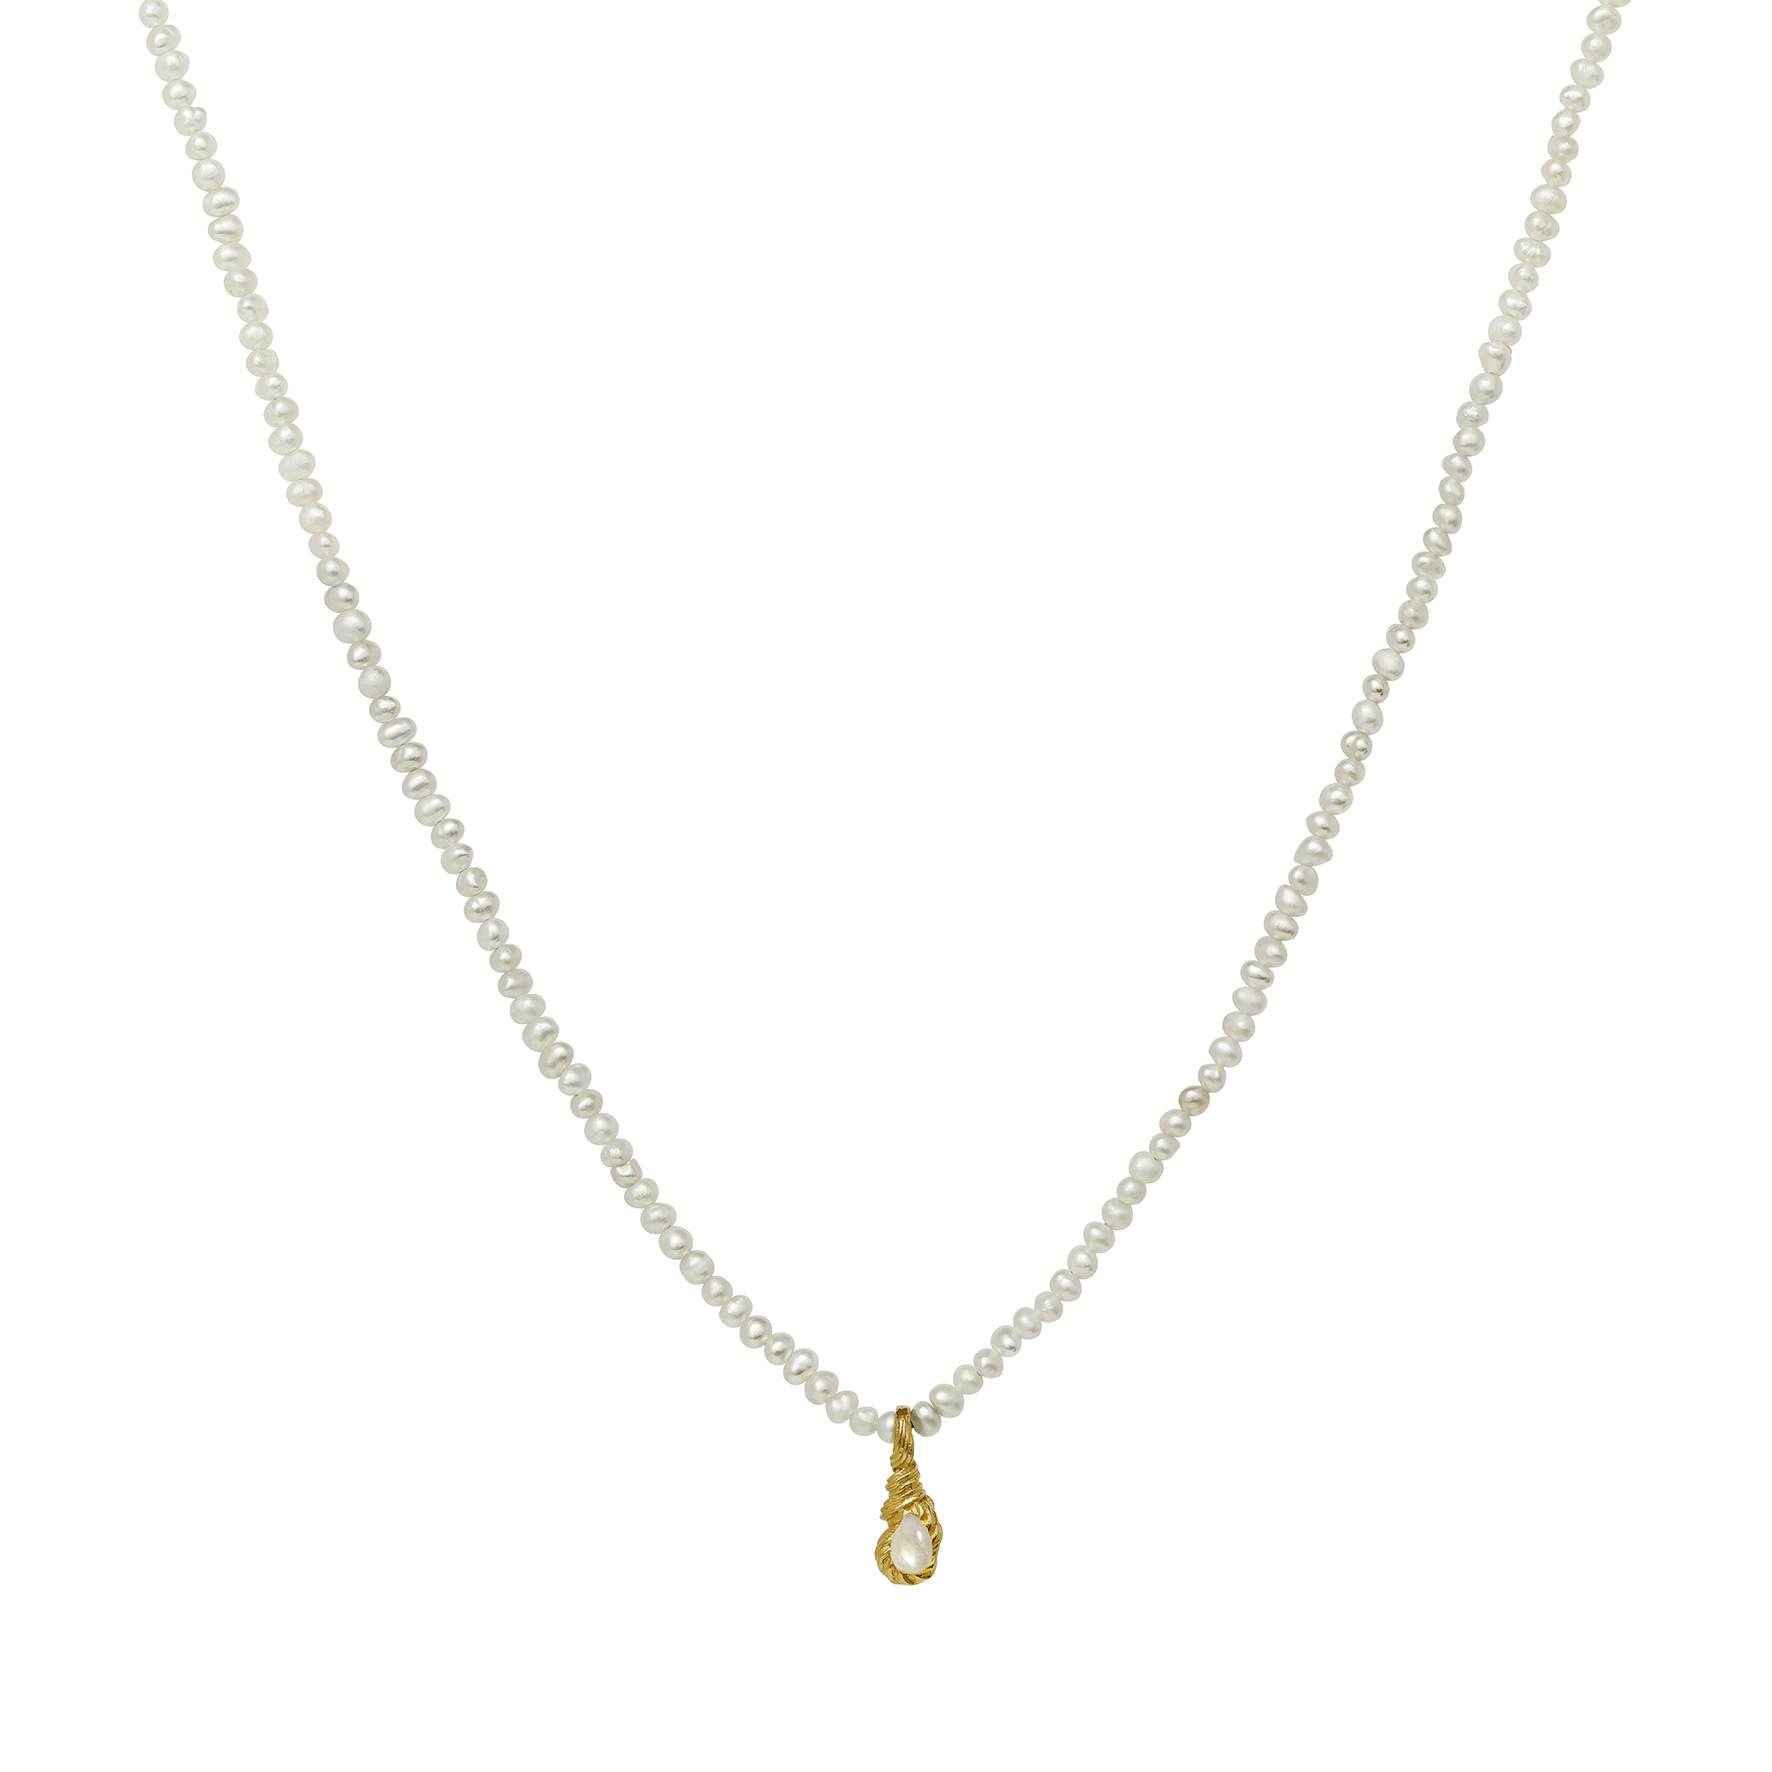 Aqua Necklace fra Maanesten i Forgyldt-Sølv Sterling 925|Freshwater Pearl